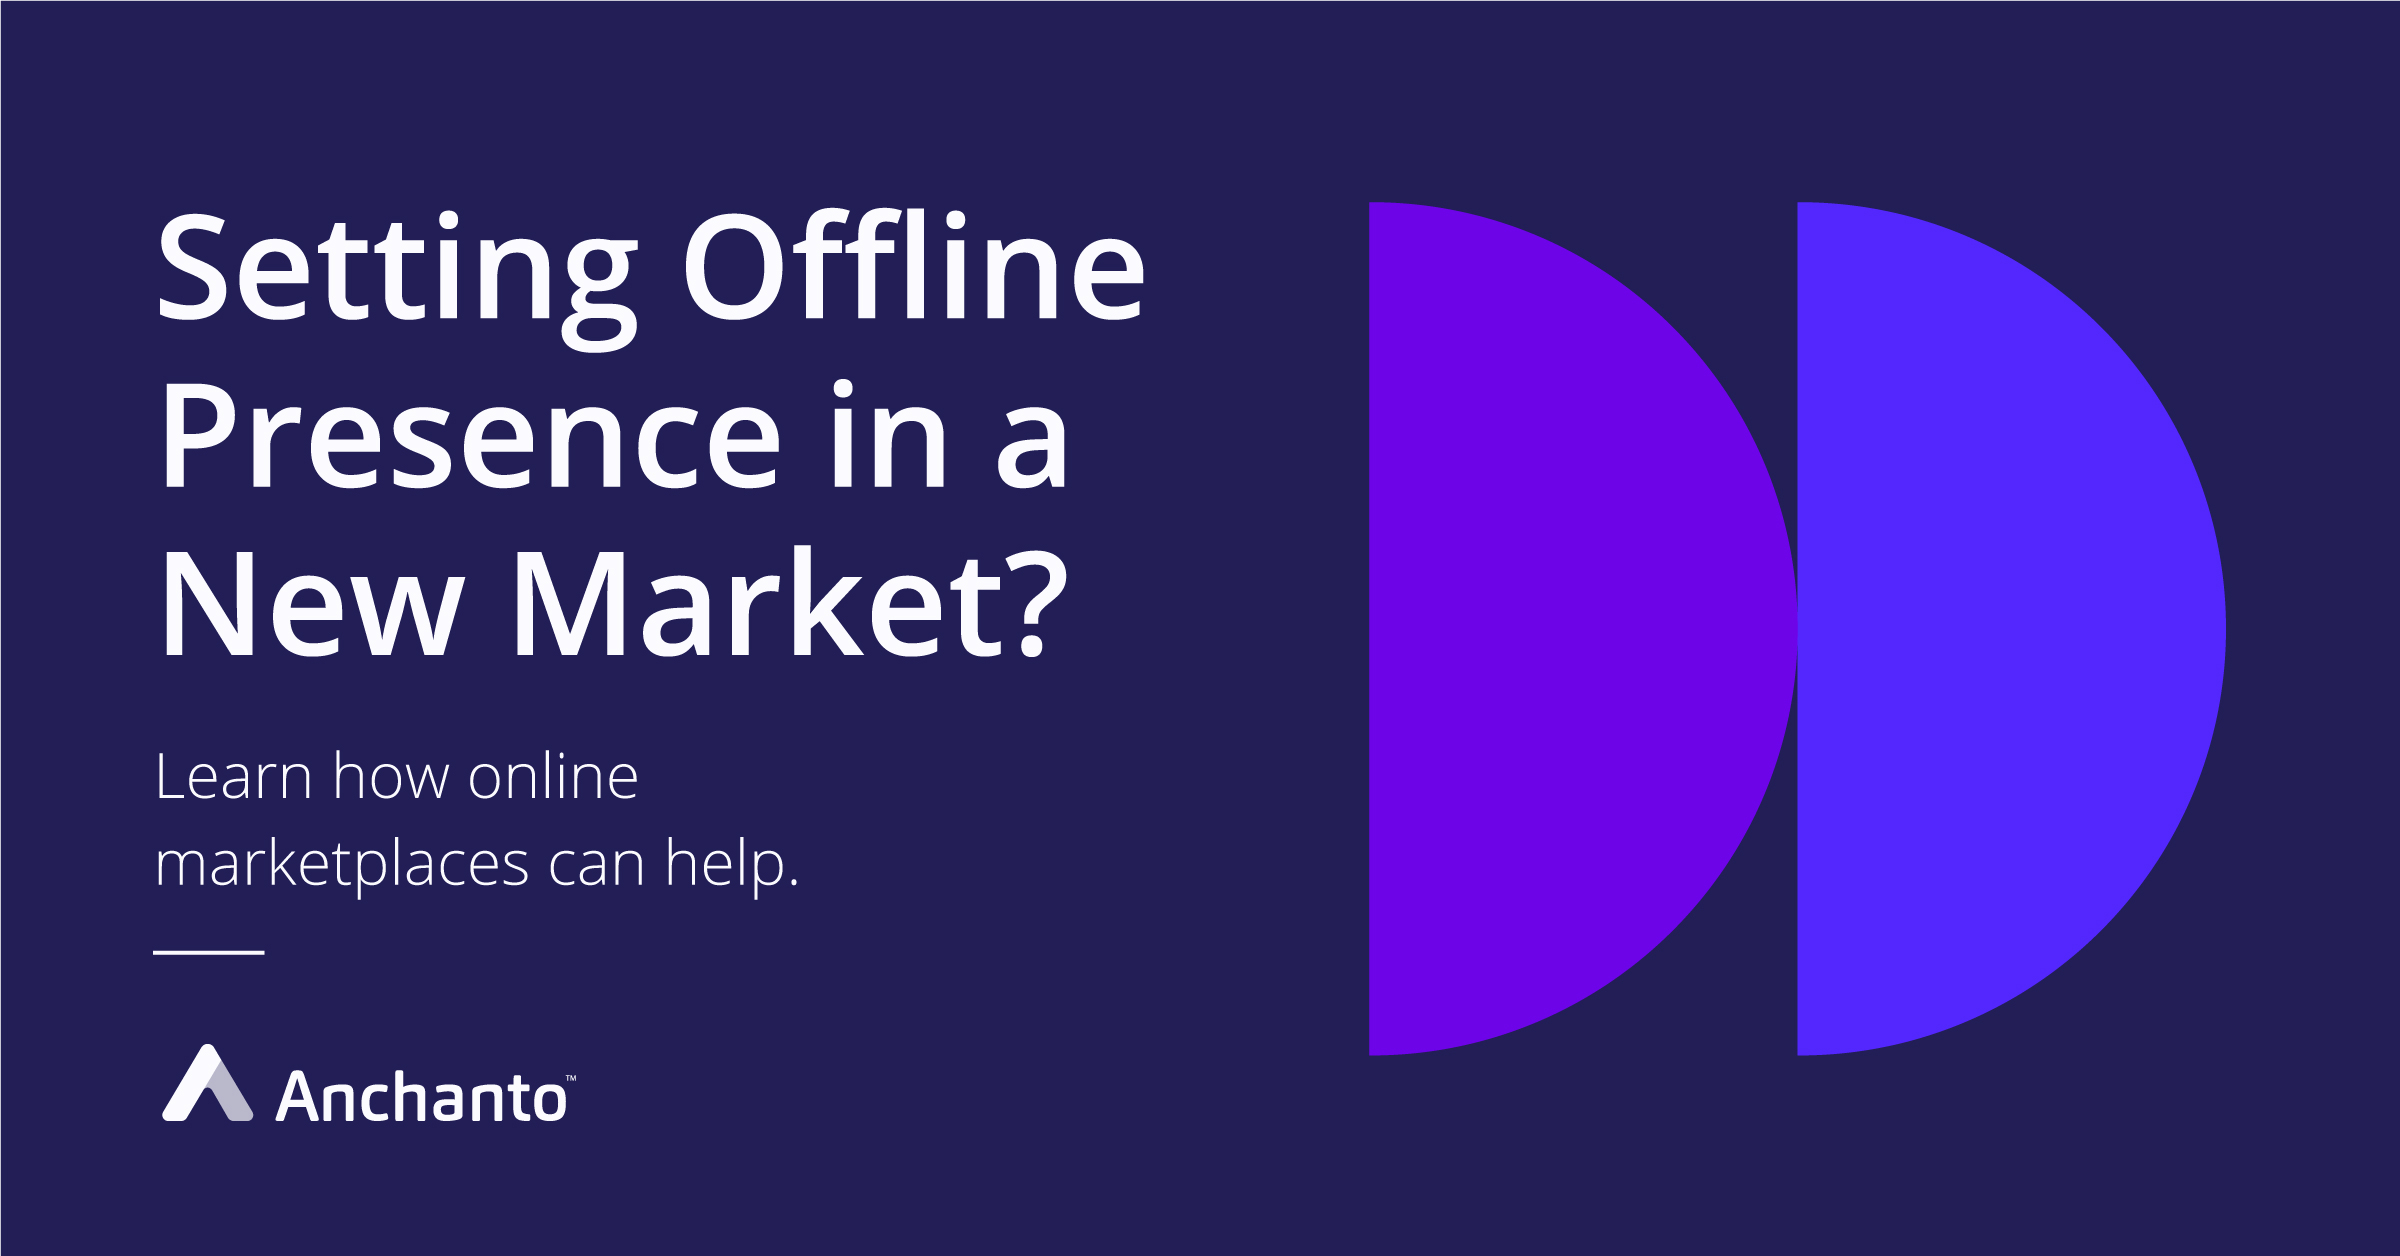 marketplaces_help_setup_offline_presence_new_market